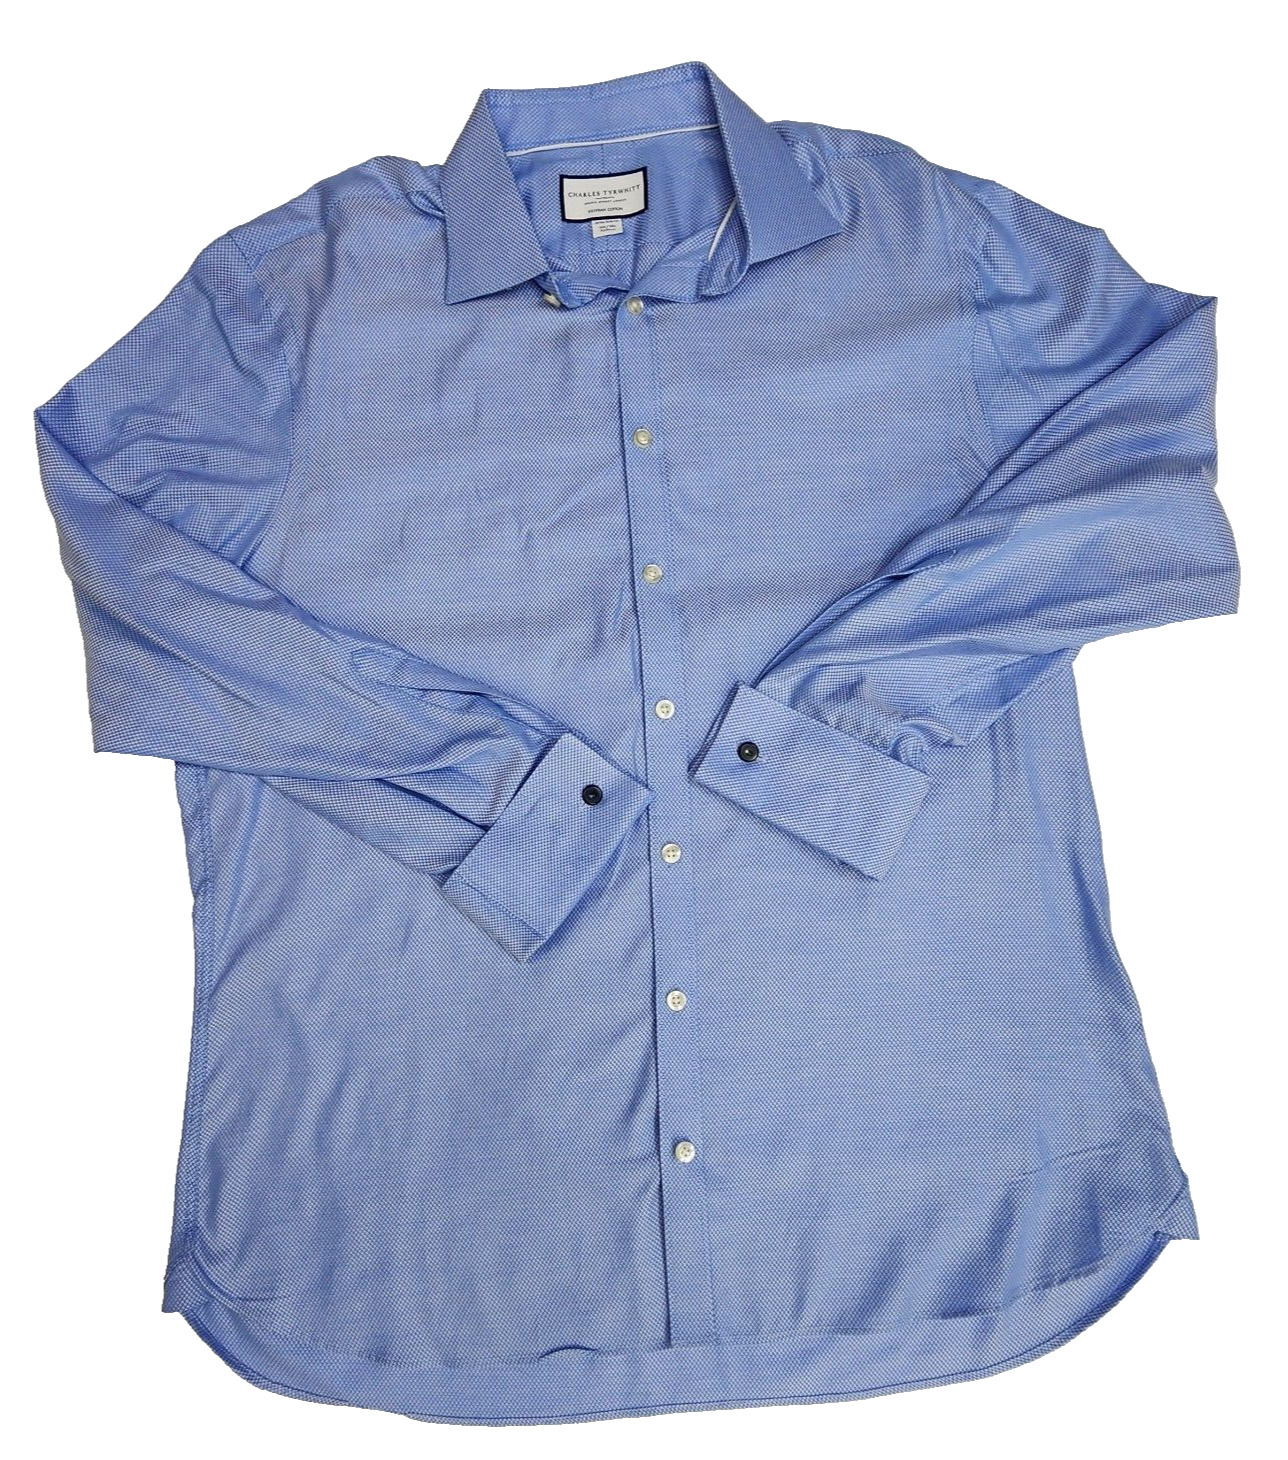 Charles Tyrwhitt Long Sleeve Dress Shirt French Cuffs Blue Mens Size 16.5 - 34